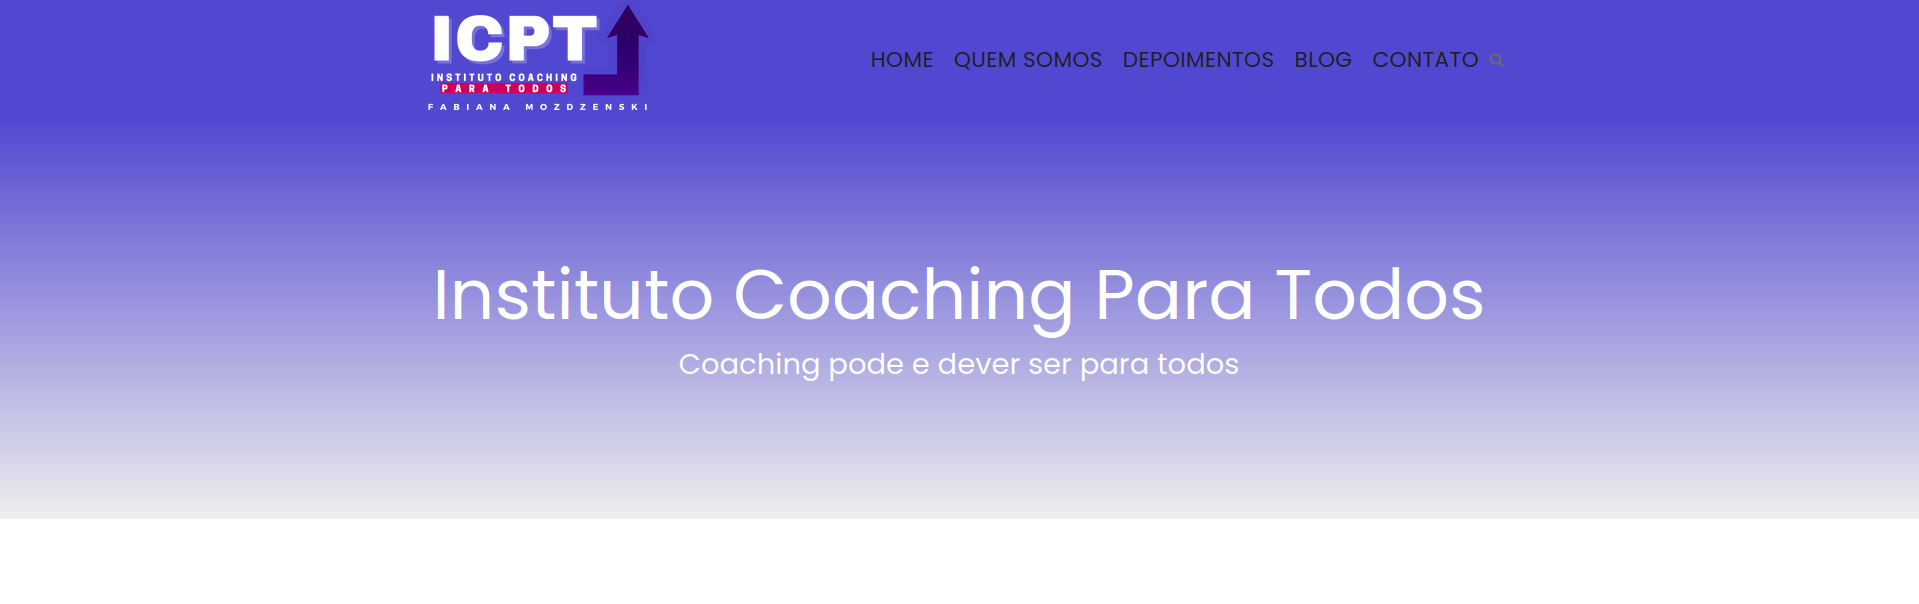 PortfolioICPT - Instituto Coaching Para Todos 